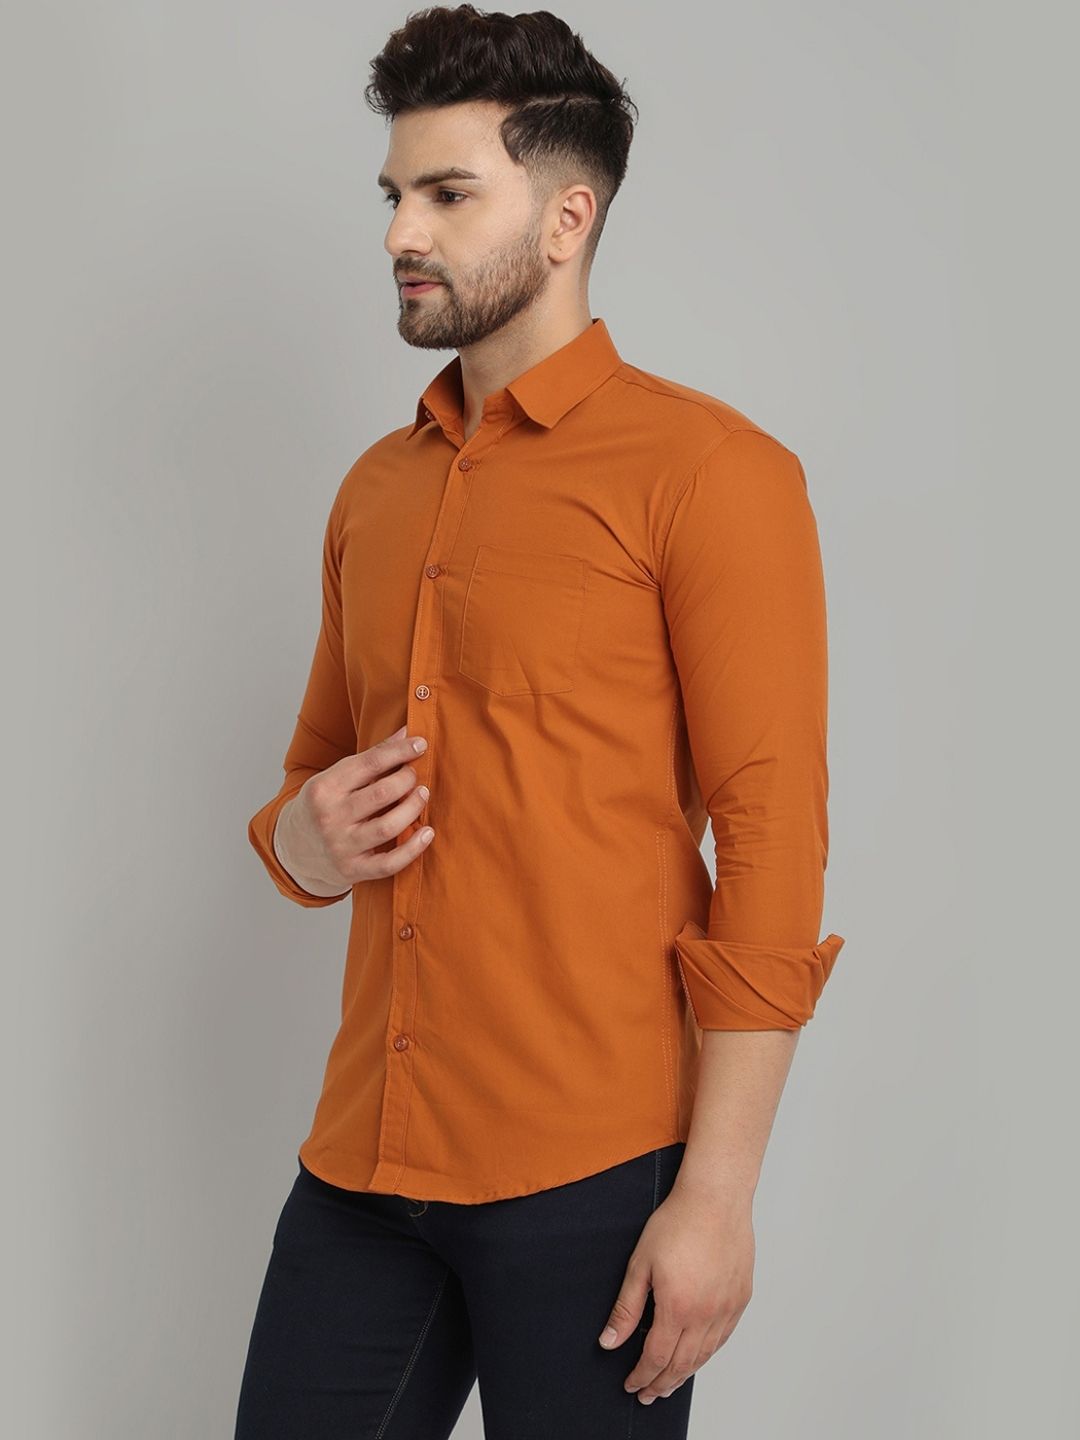 Groovy Pure Cotton Solid shirt - Bright Orange